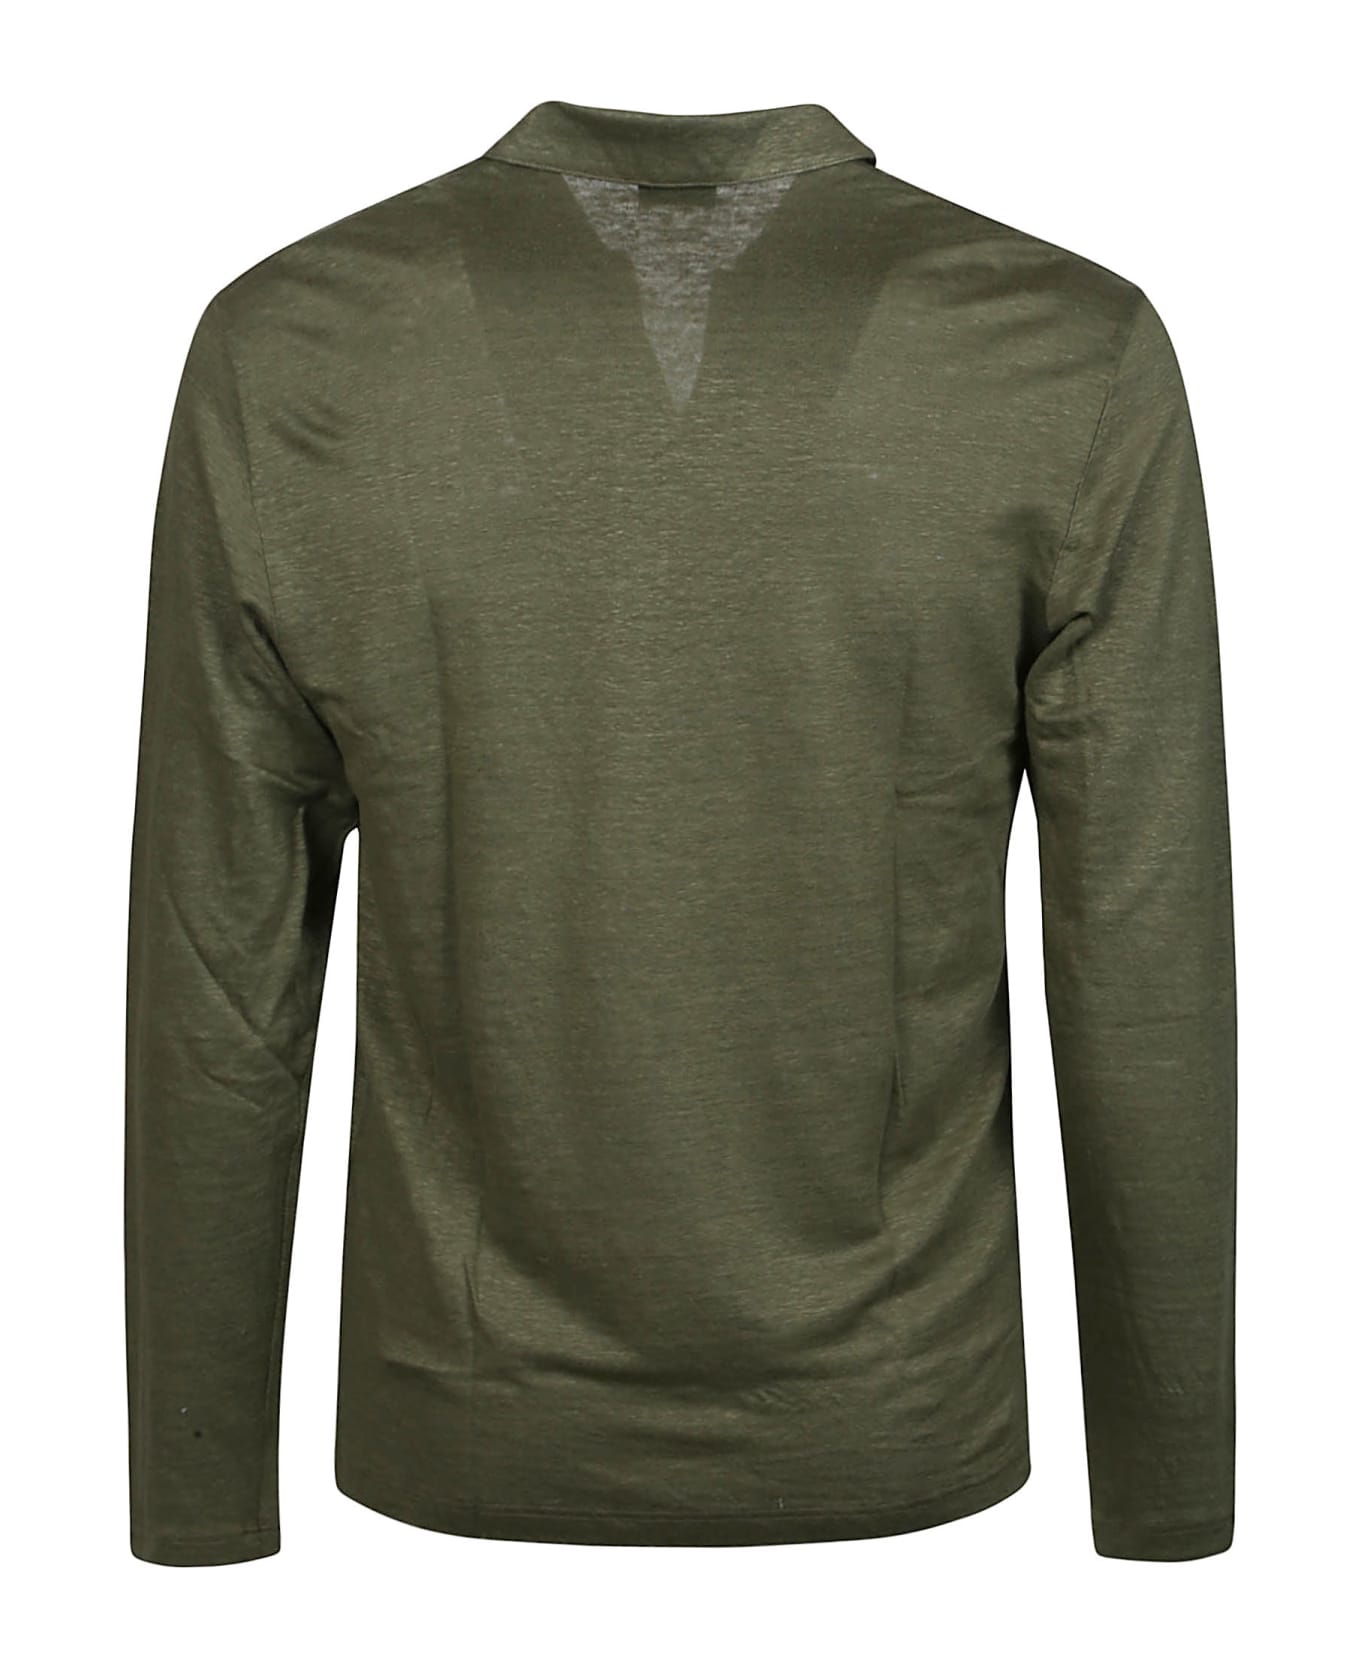 Barba Napoli Short Sleeve Polo Shirt - Verde ポロシャツ